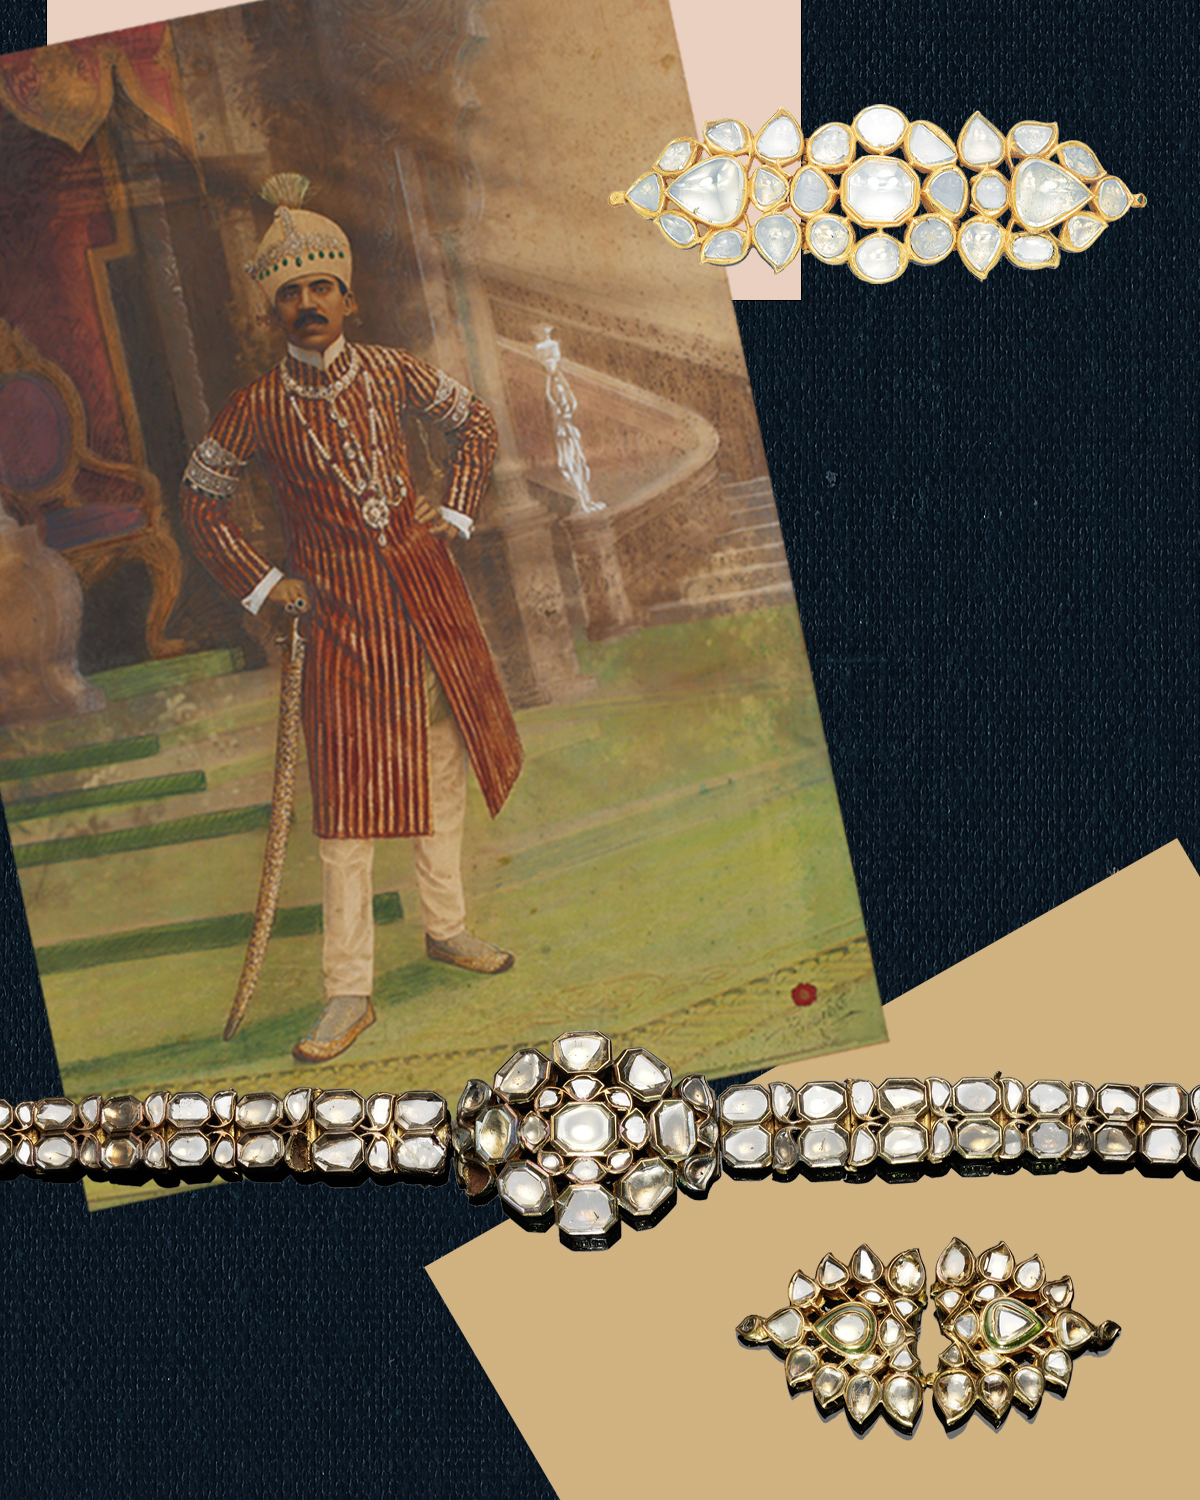 Nizams of Hyderabad adorned with three armbands